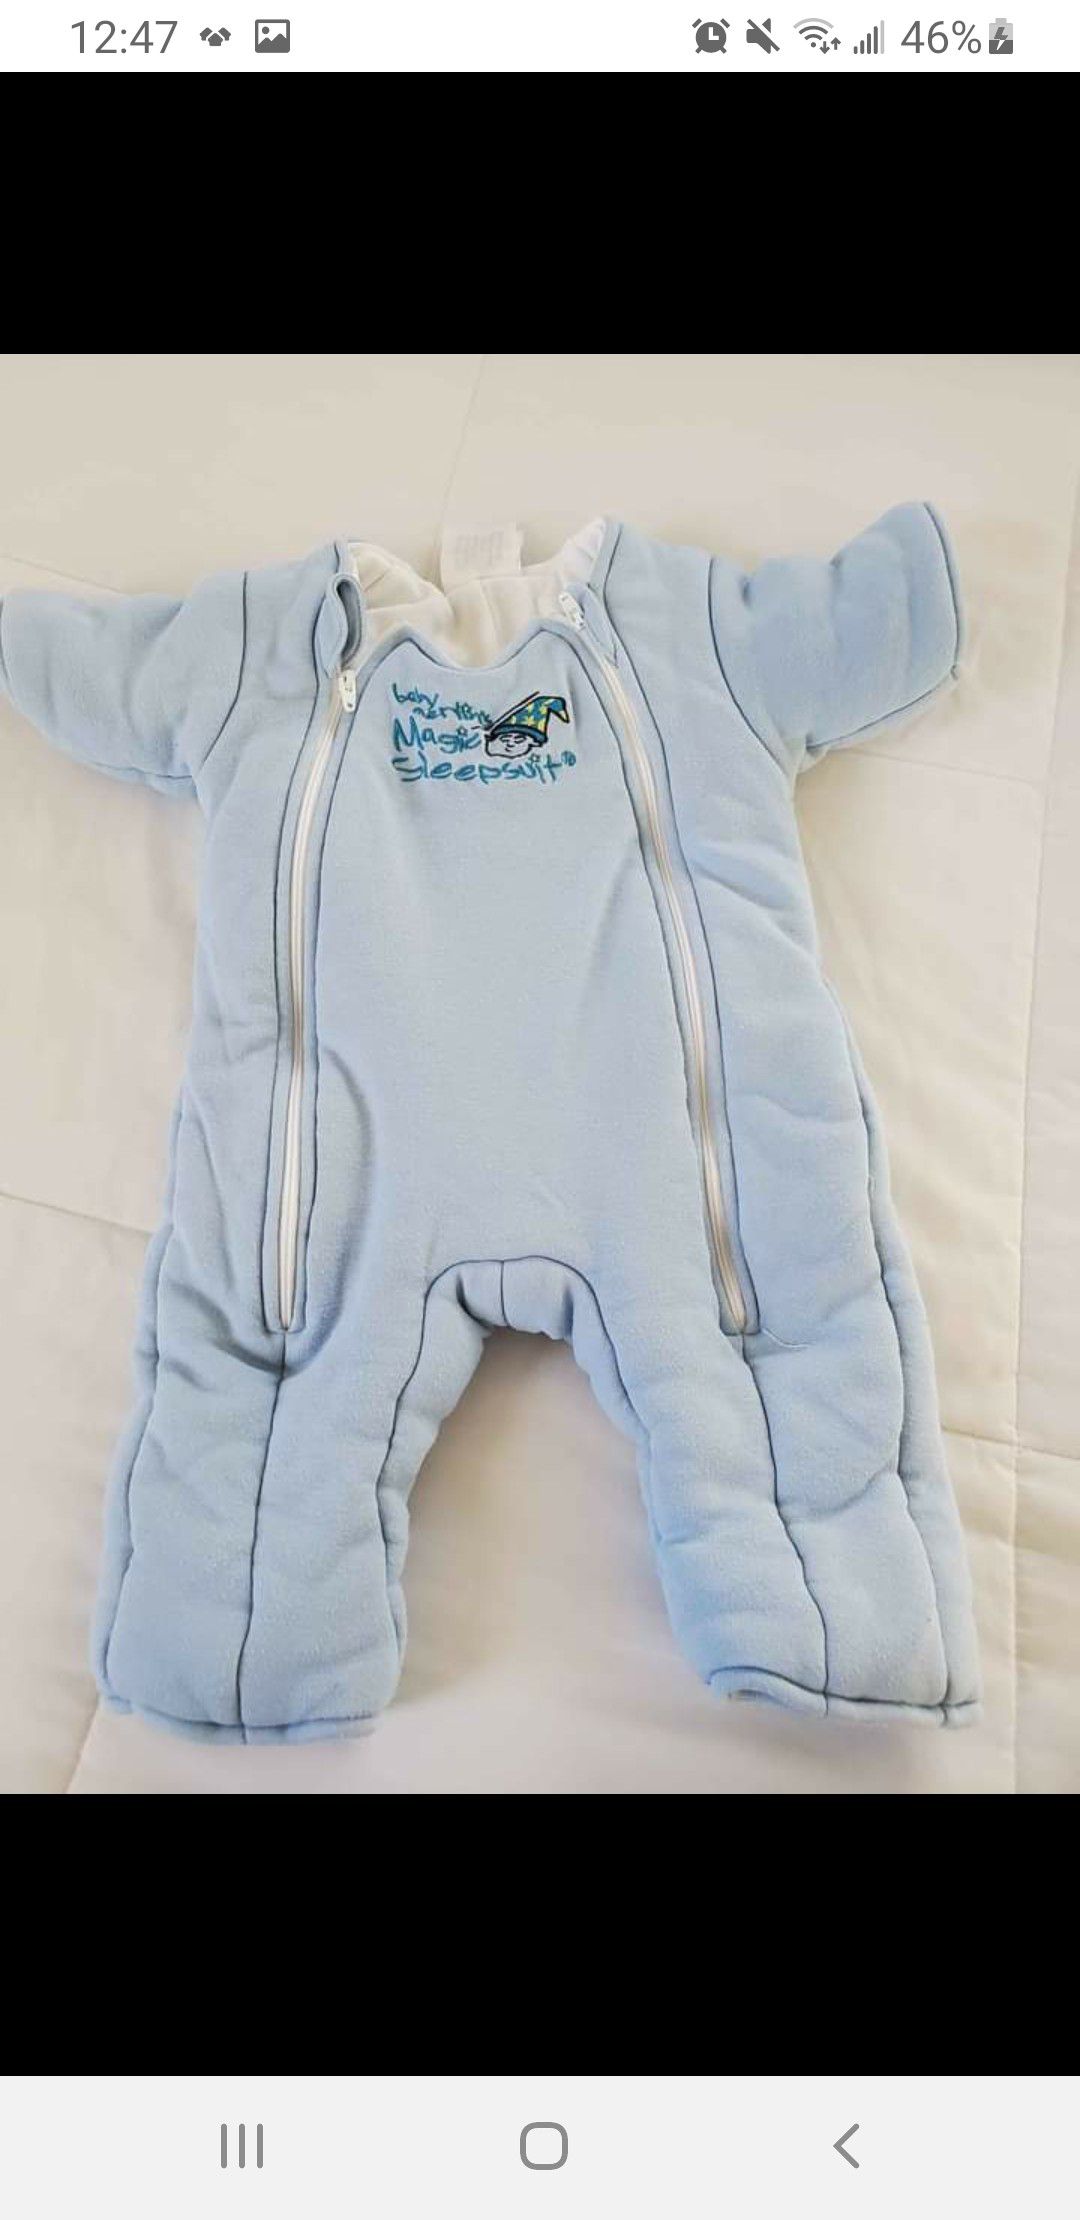 Magic merlins sleep suit